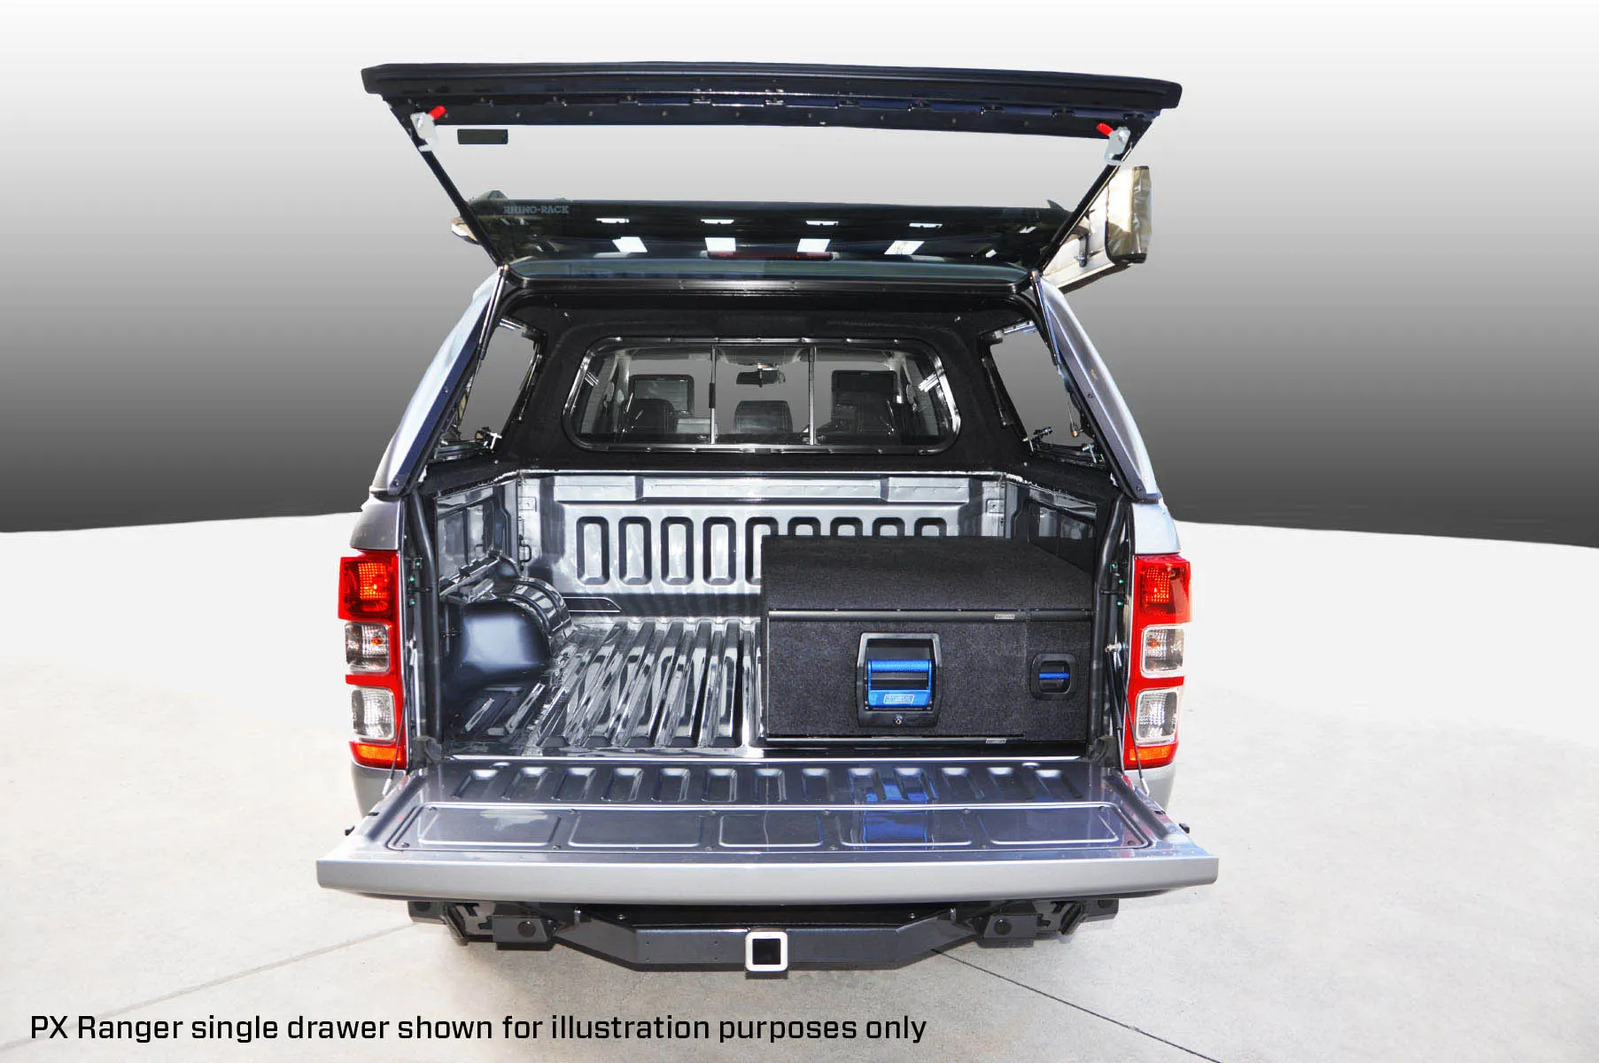 Car Boot Storage Organiser - Storage for cars, 4WD's, Utes, Vans